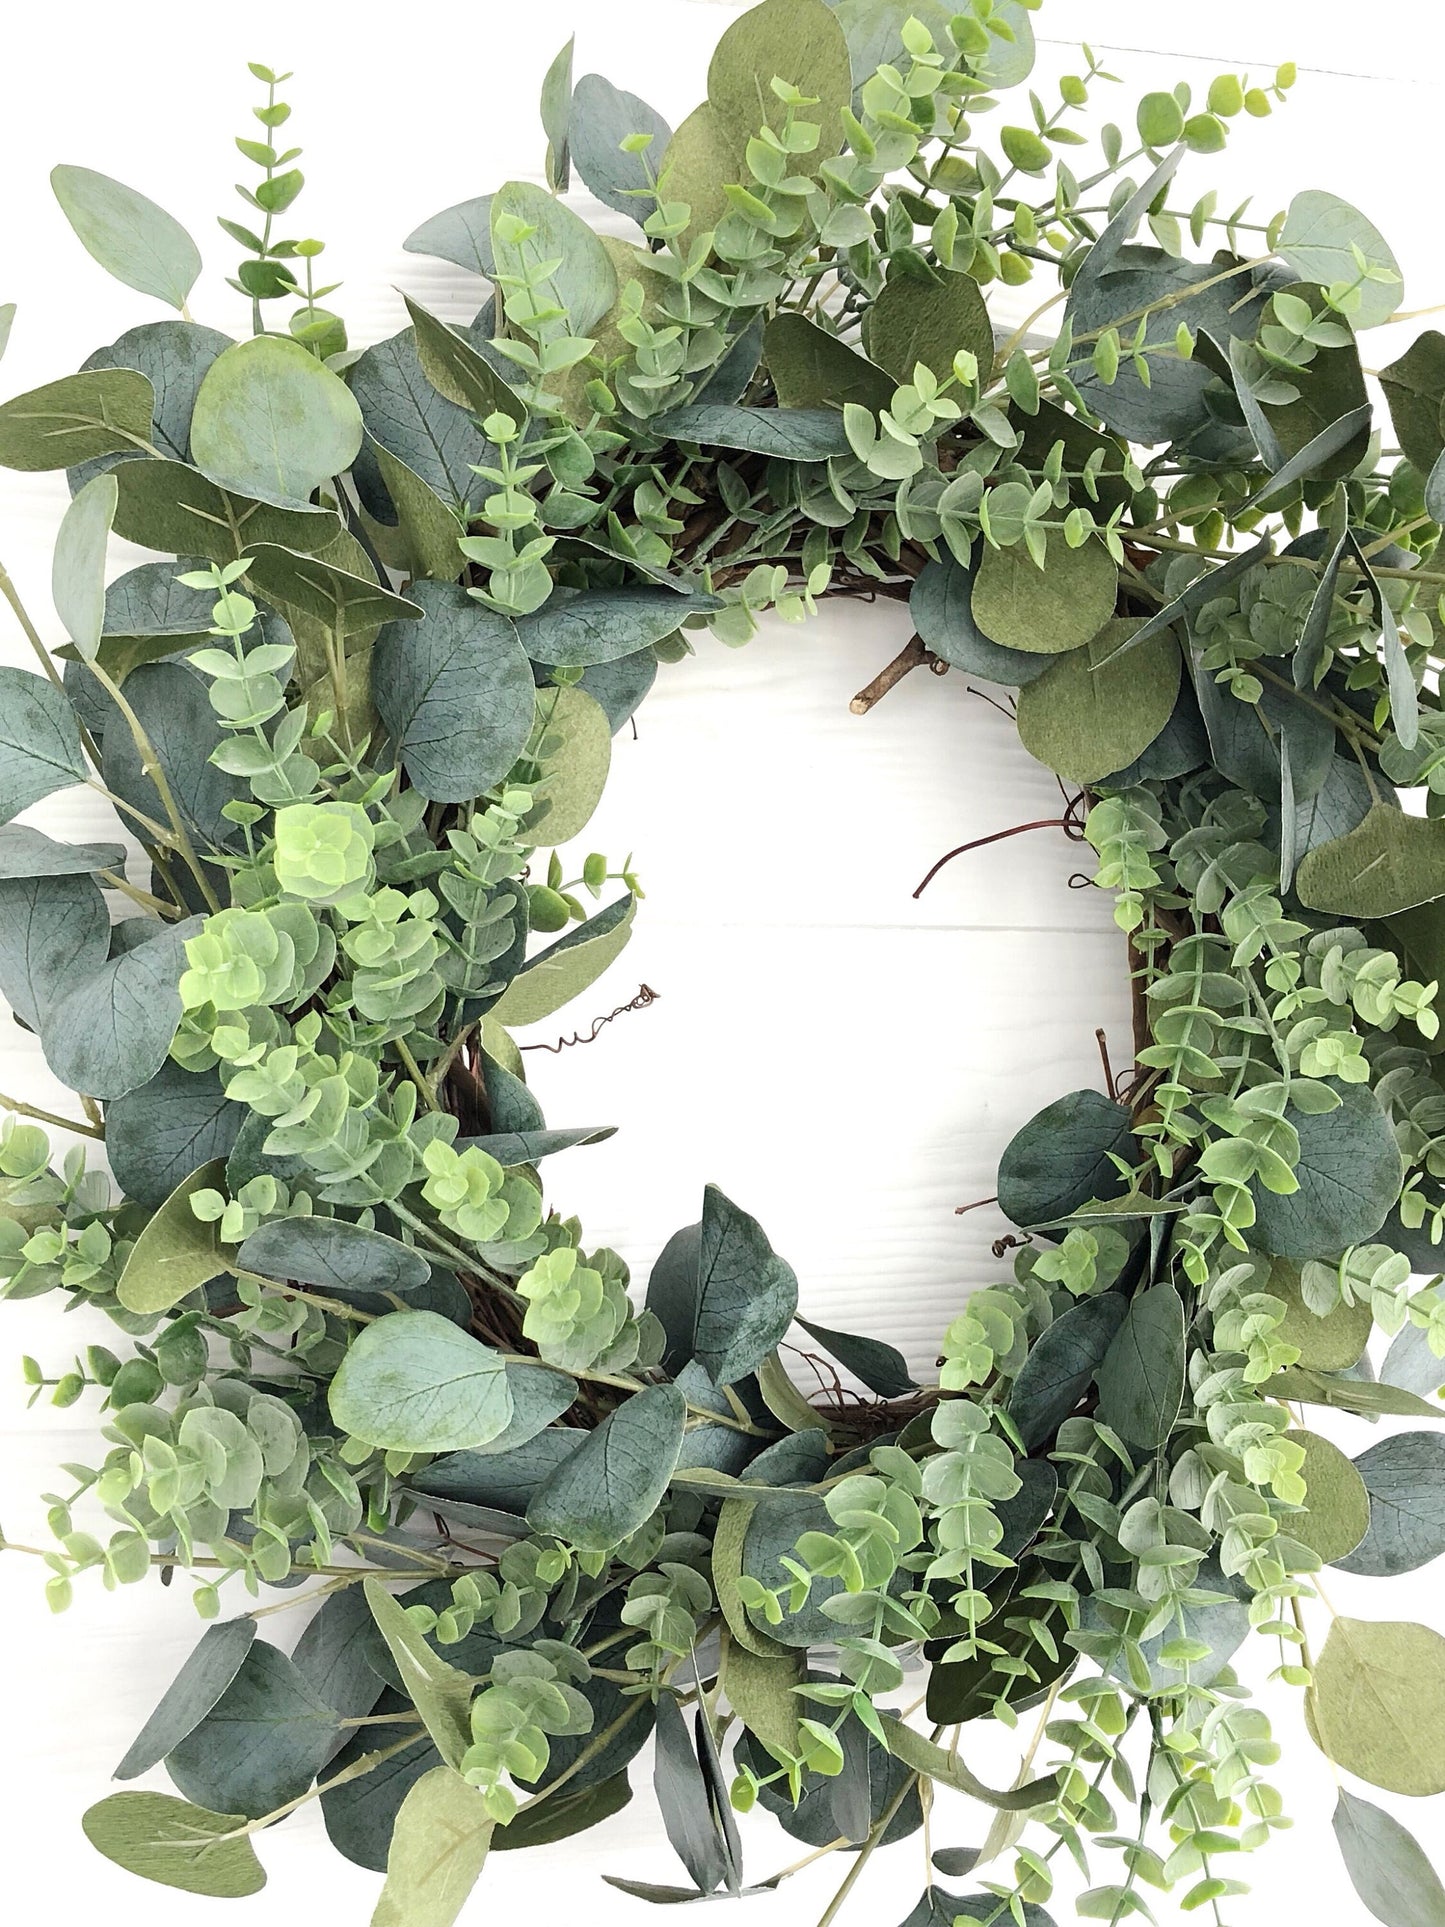 Spring Wreath, Mixed Eucalyptus Wreath, Greenery Wreath, Everyday Wreath, Farmhouse Wreath for Front Door